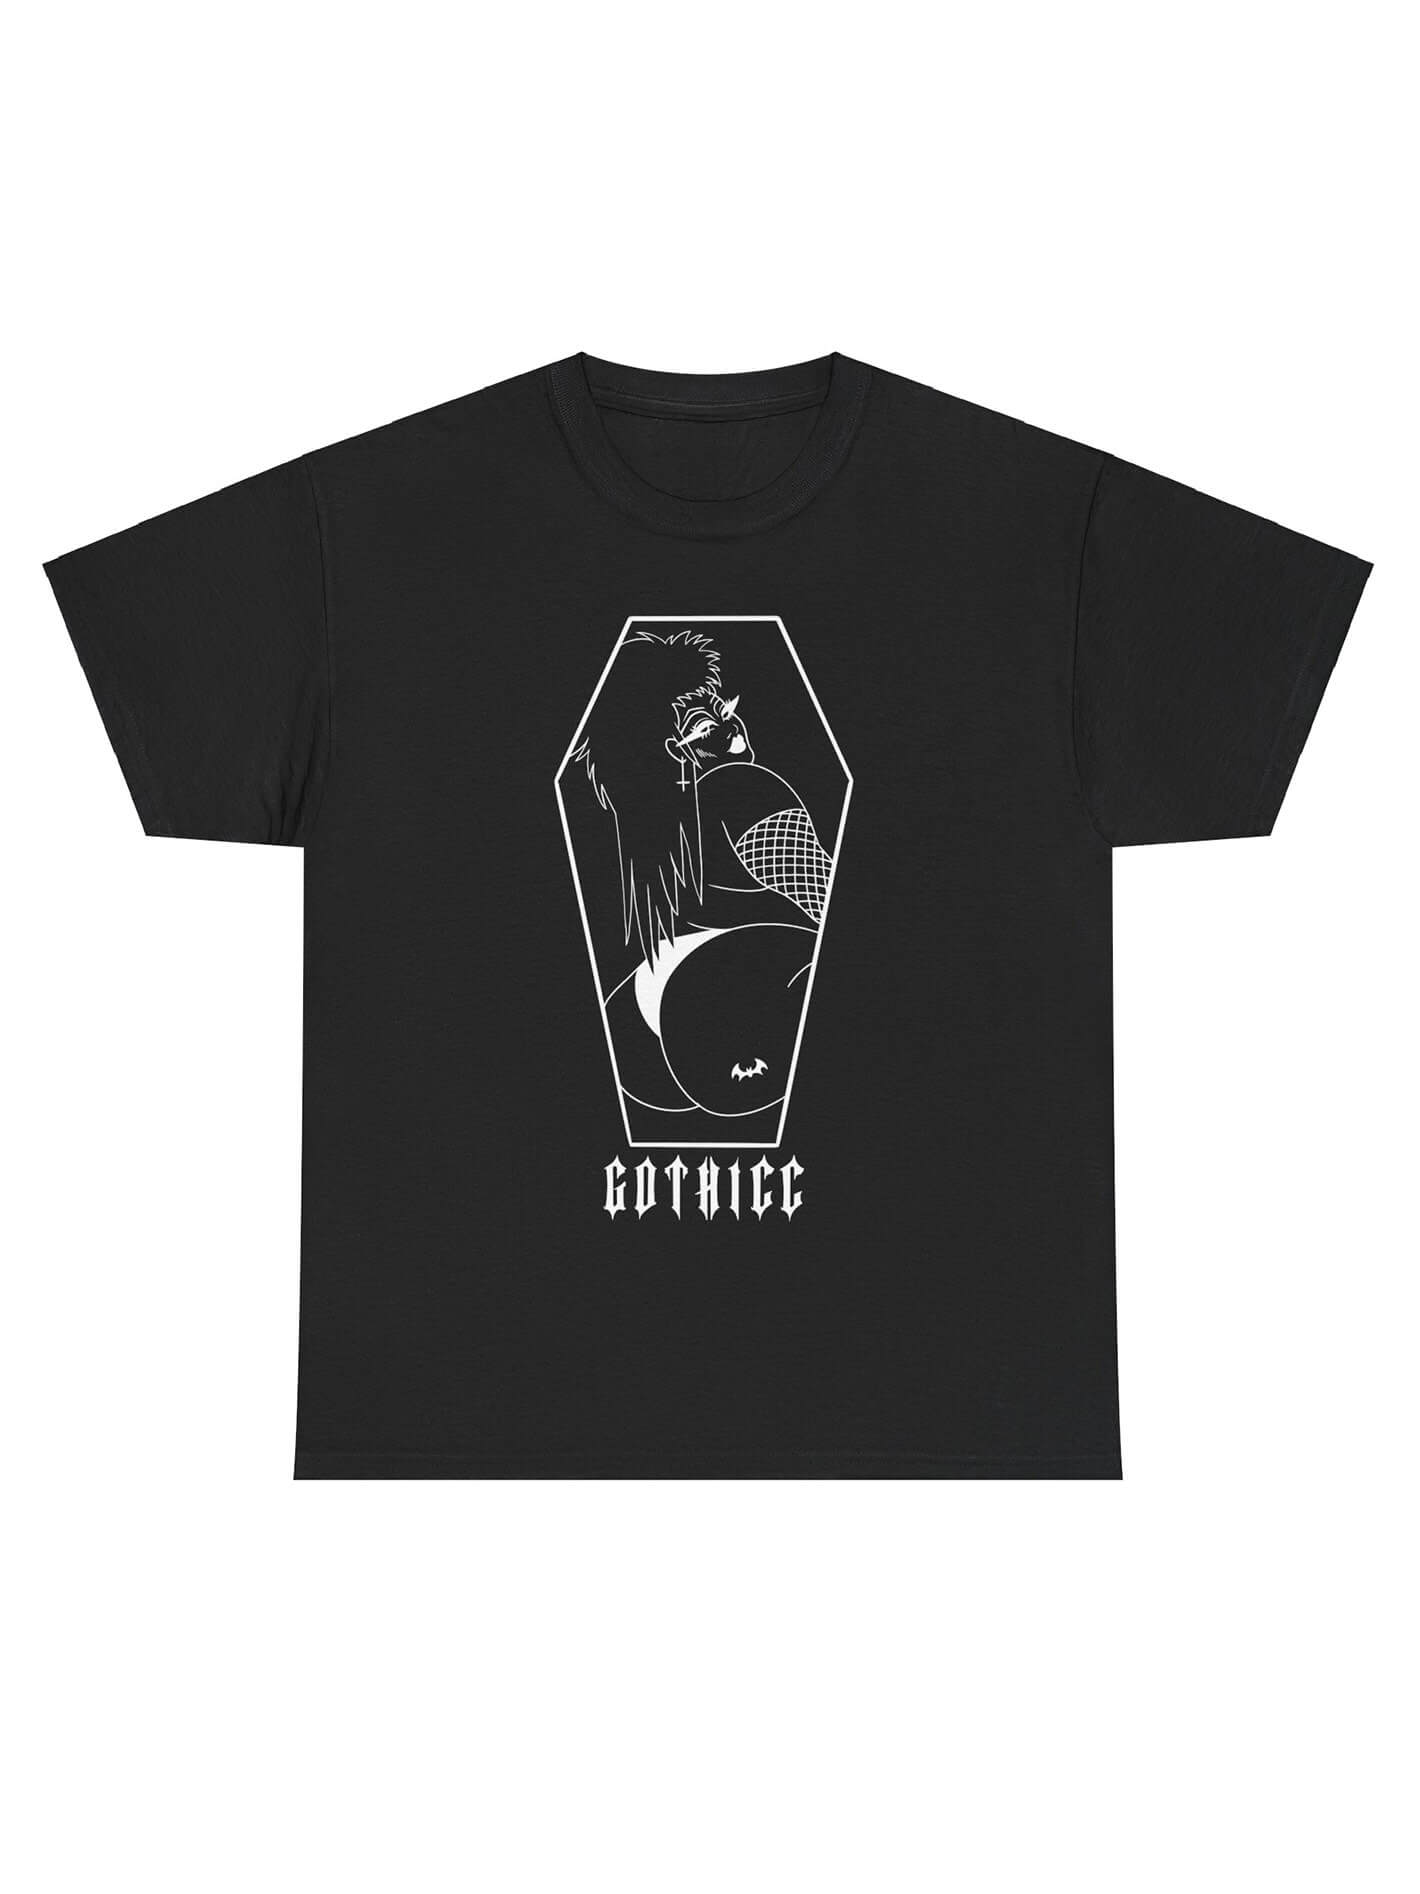 Goth plus size unisex t-shirt.